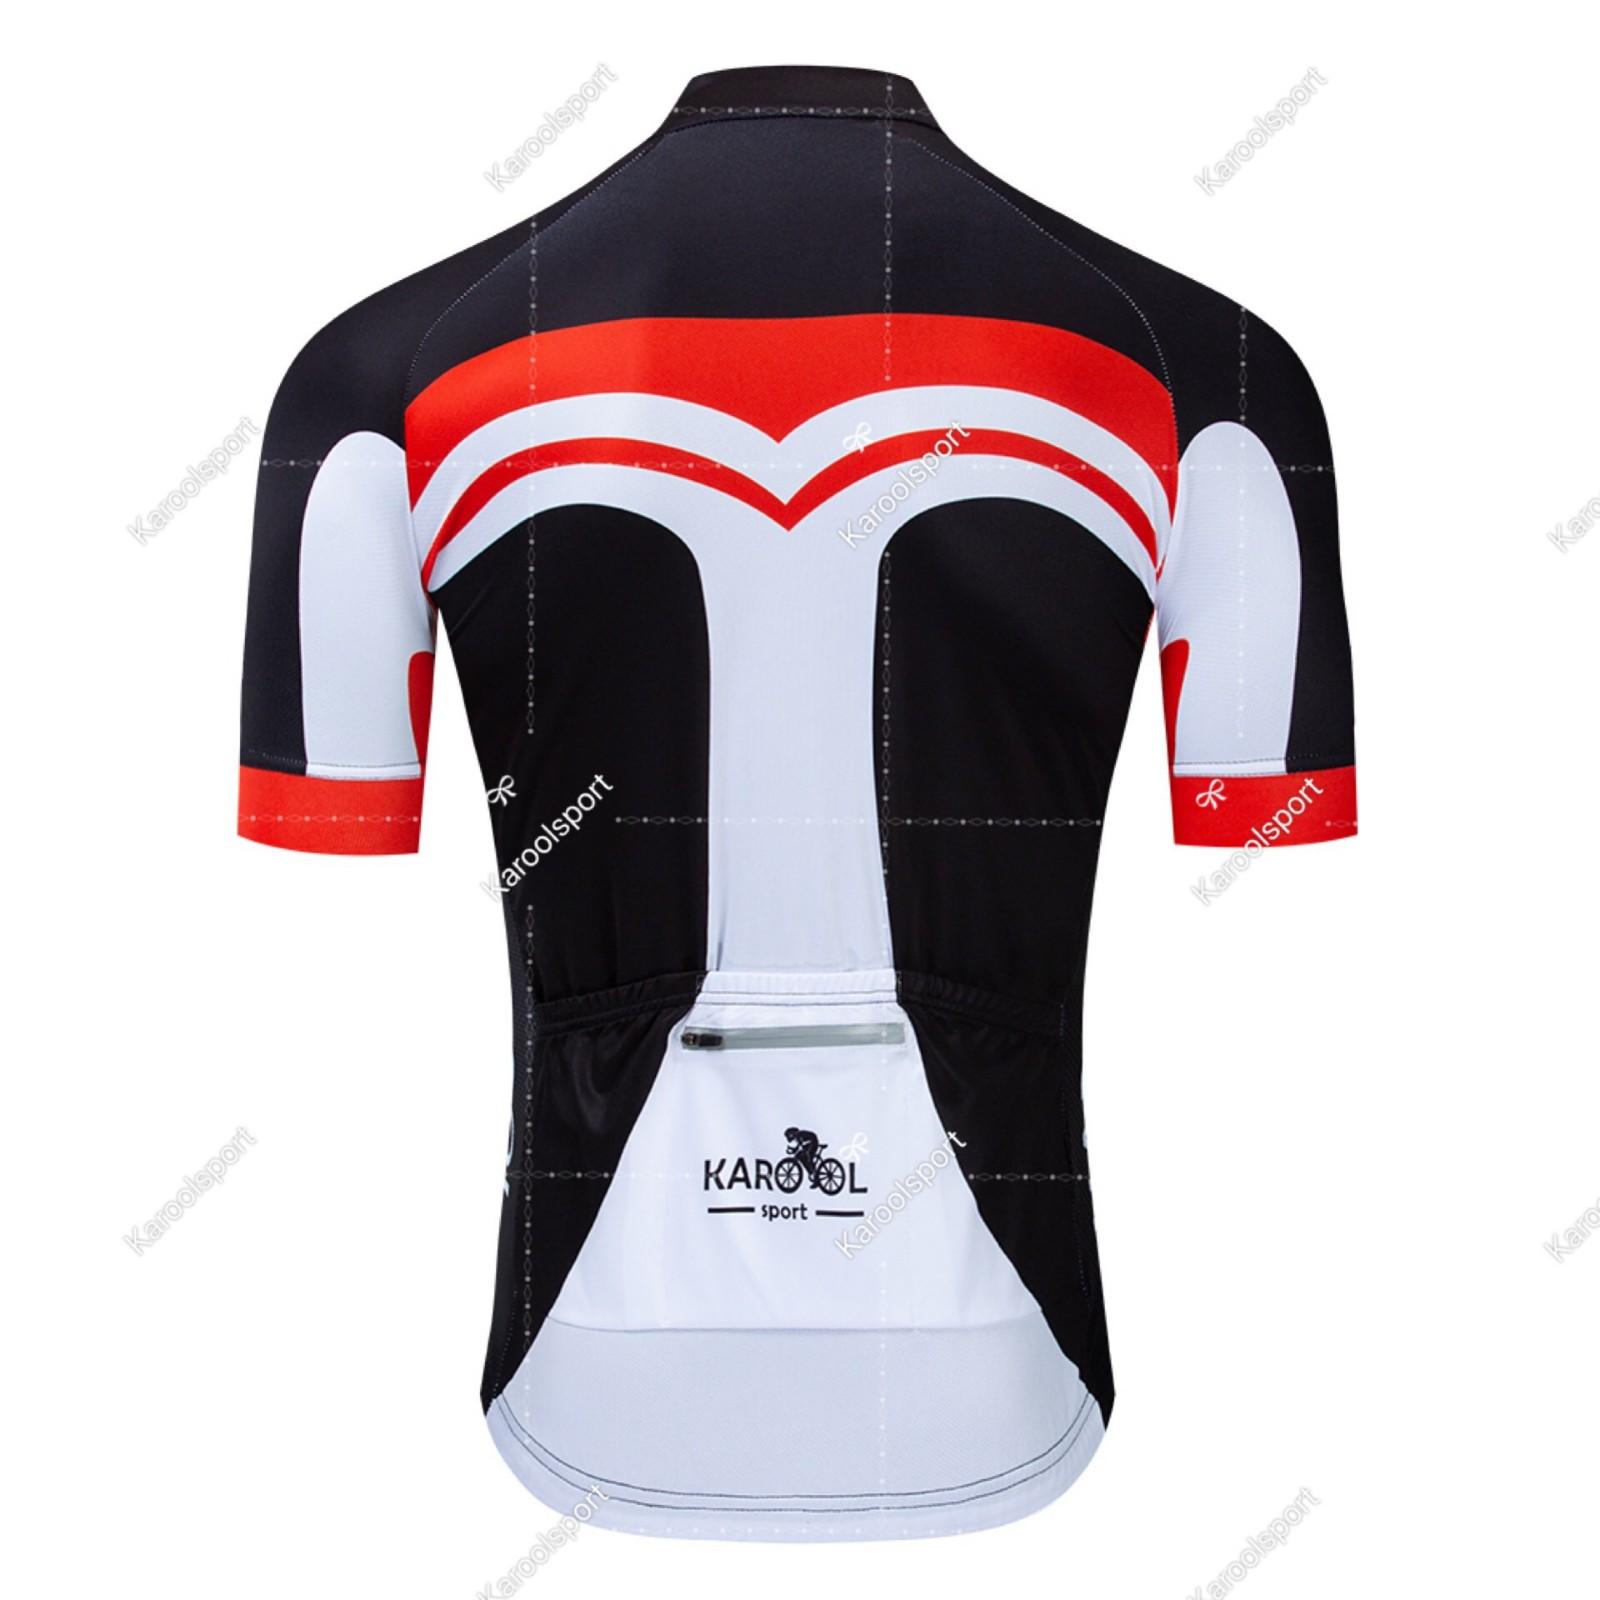 coat rain jersey cycling jersey cycling Karool Brand